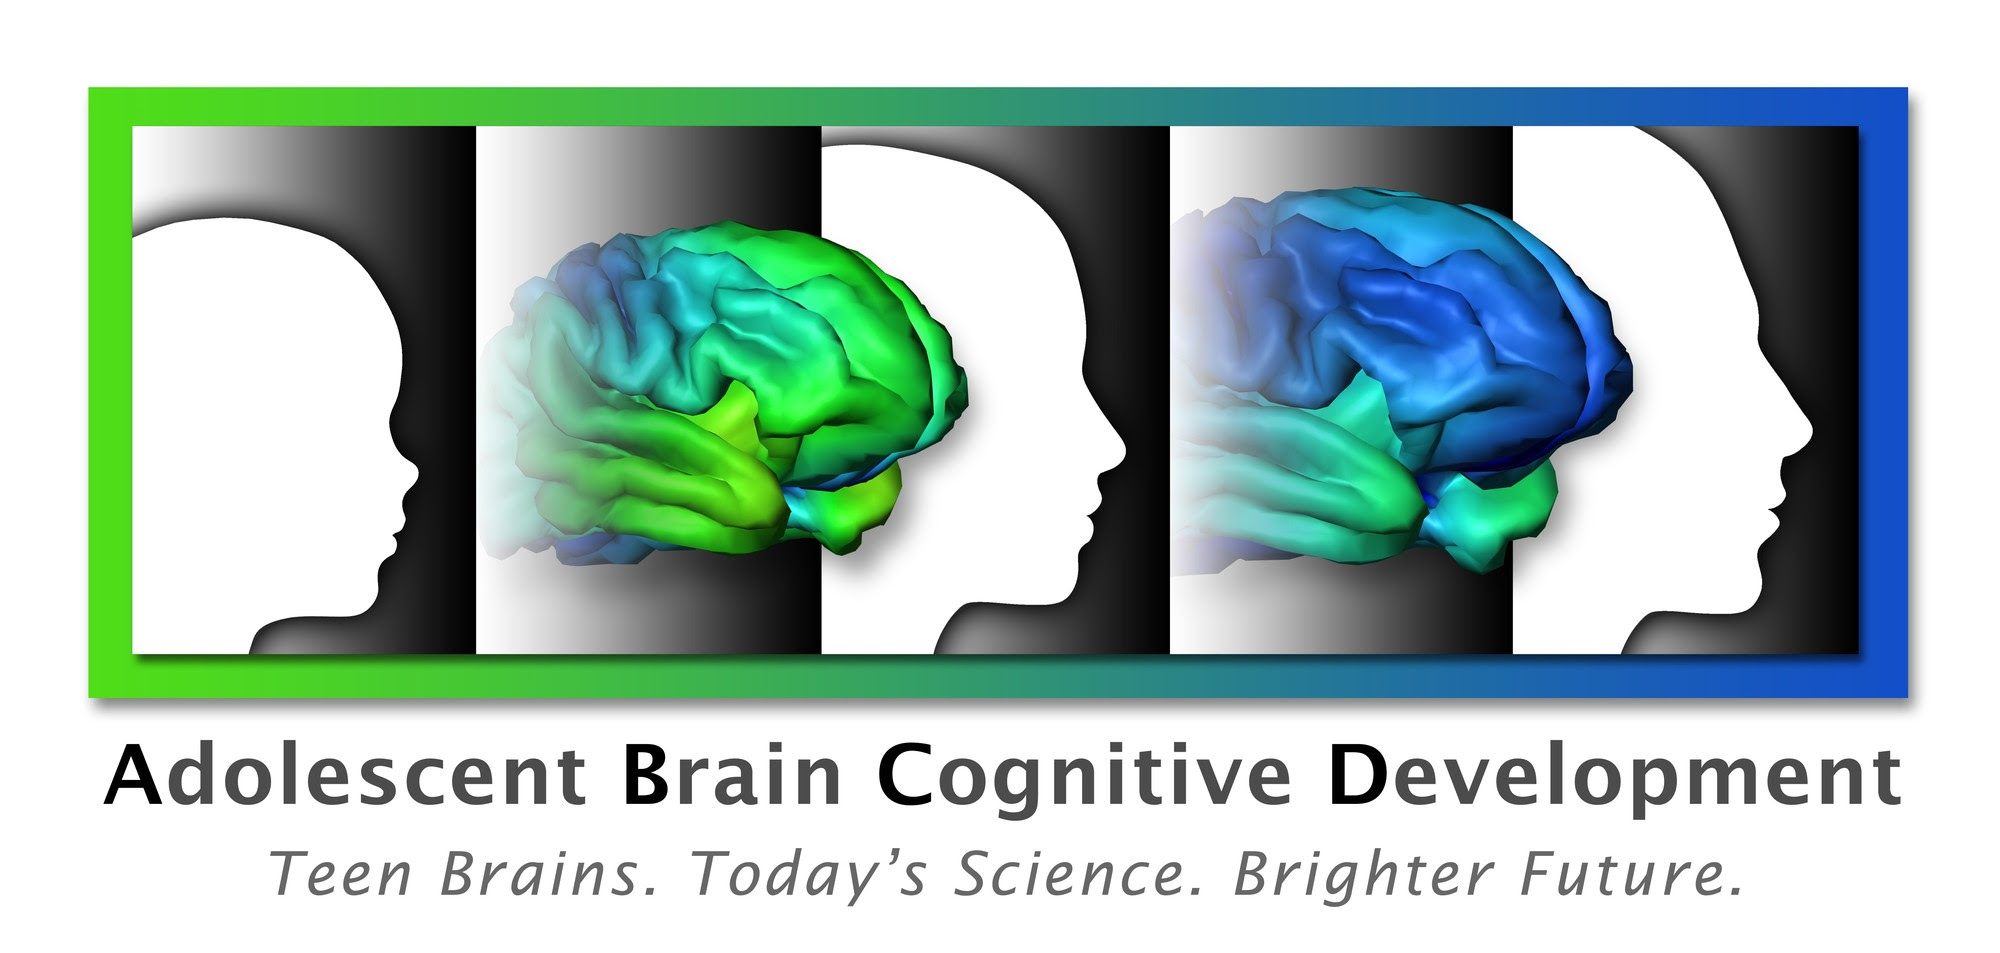 Adolescent Brain Cognitive Development - Teen Brains. Today's Science. Brighter Future.